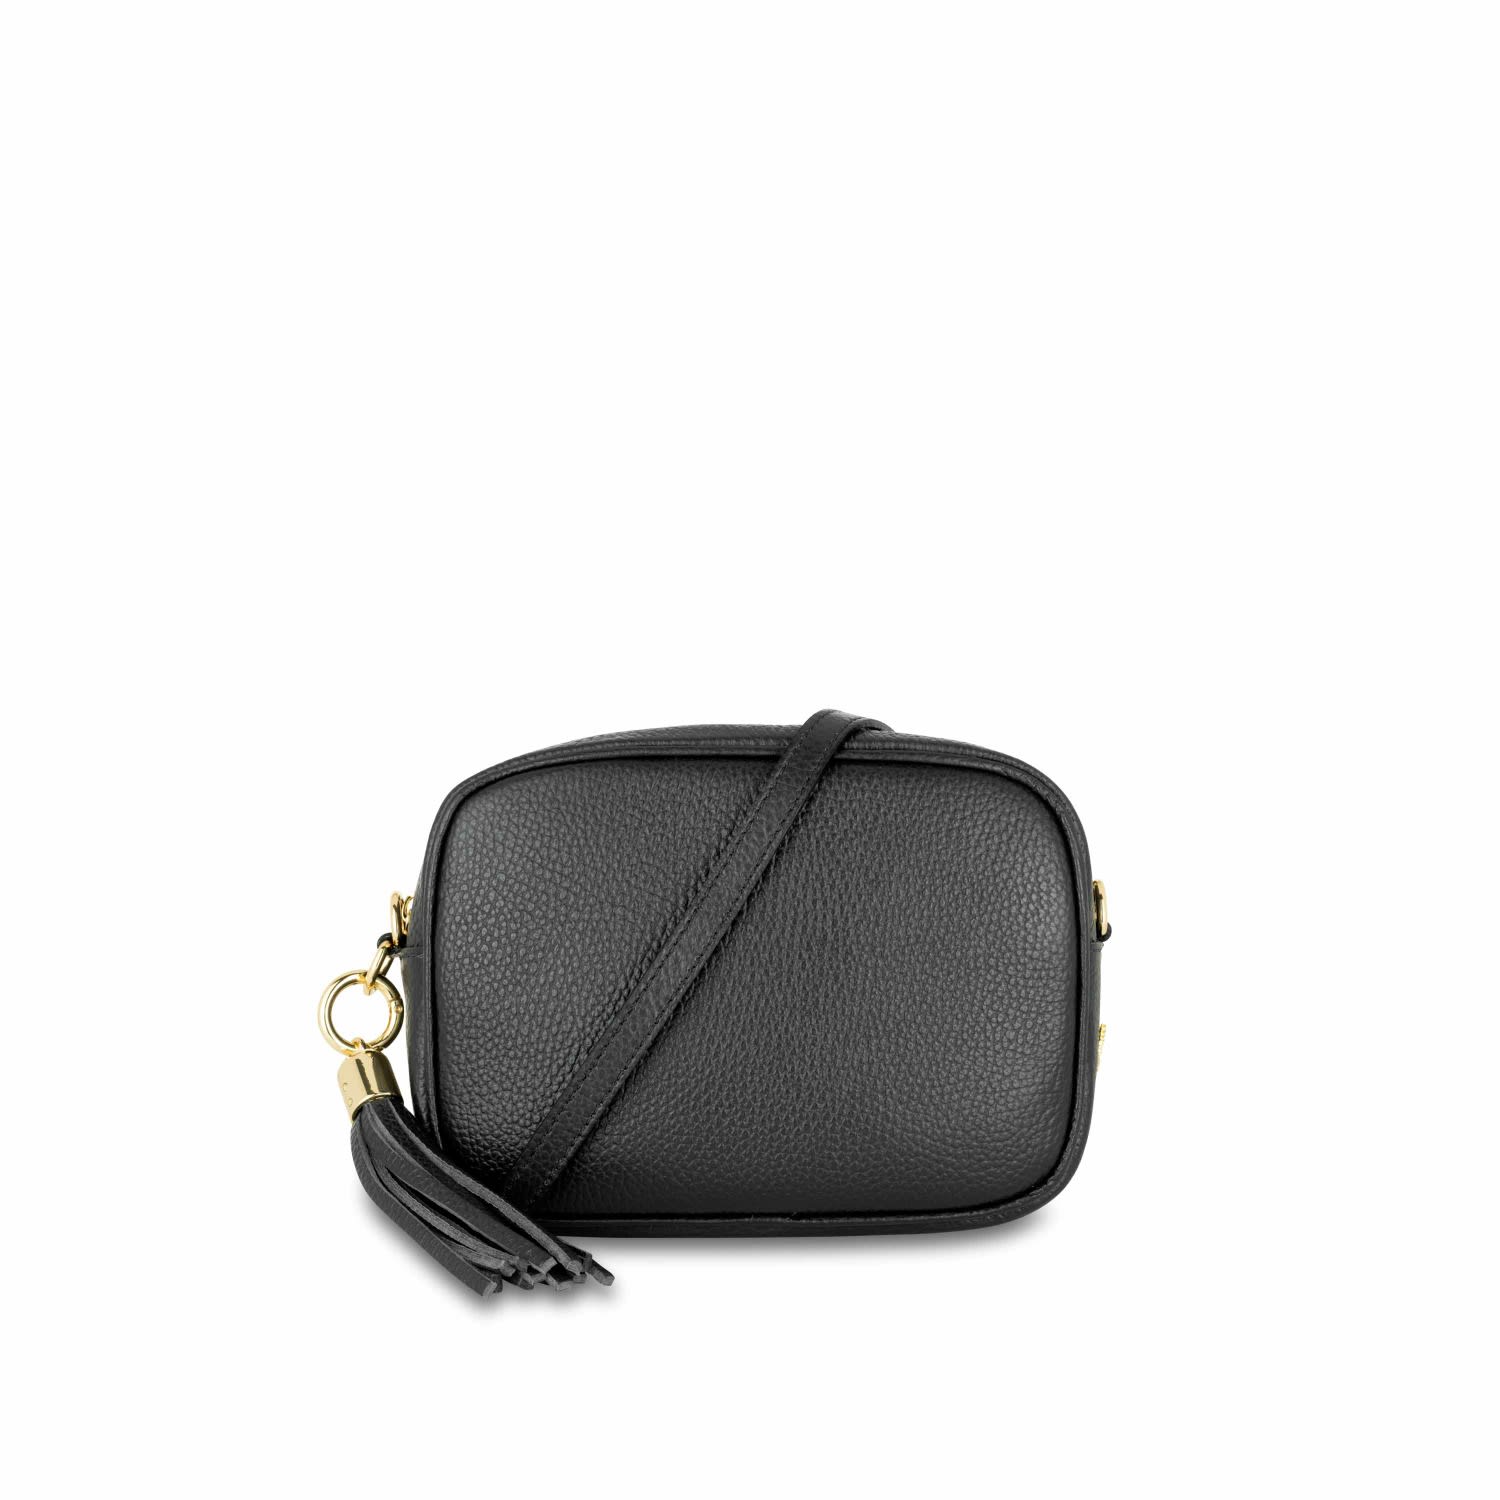 Apatchy London Women's The Tassel Black Leather Crossbody Bag